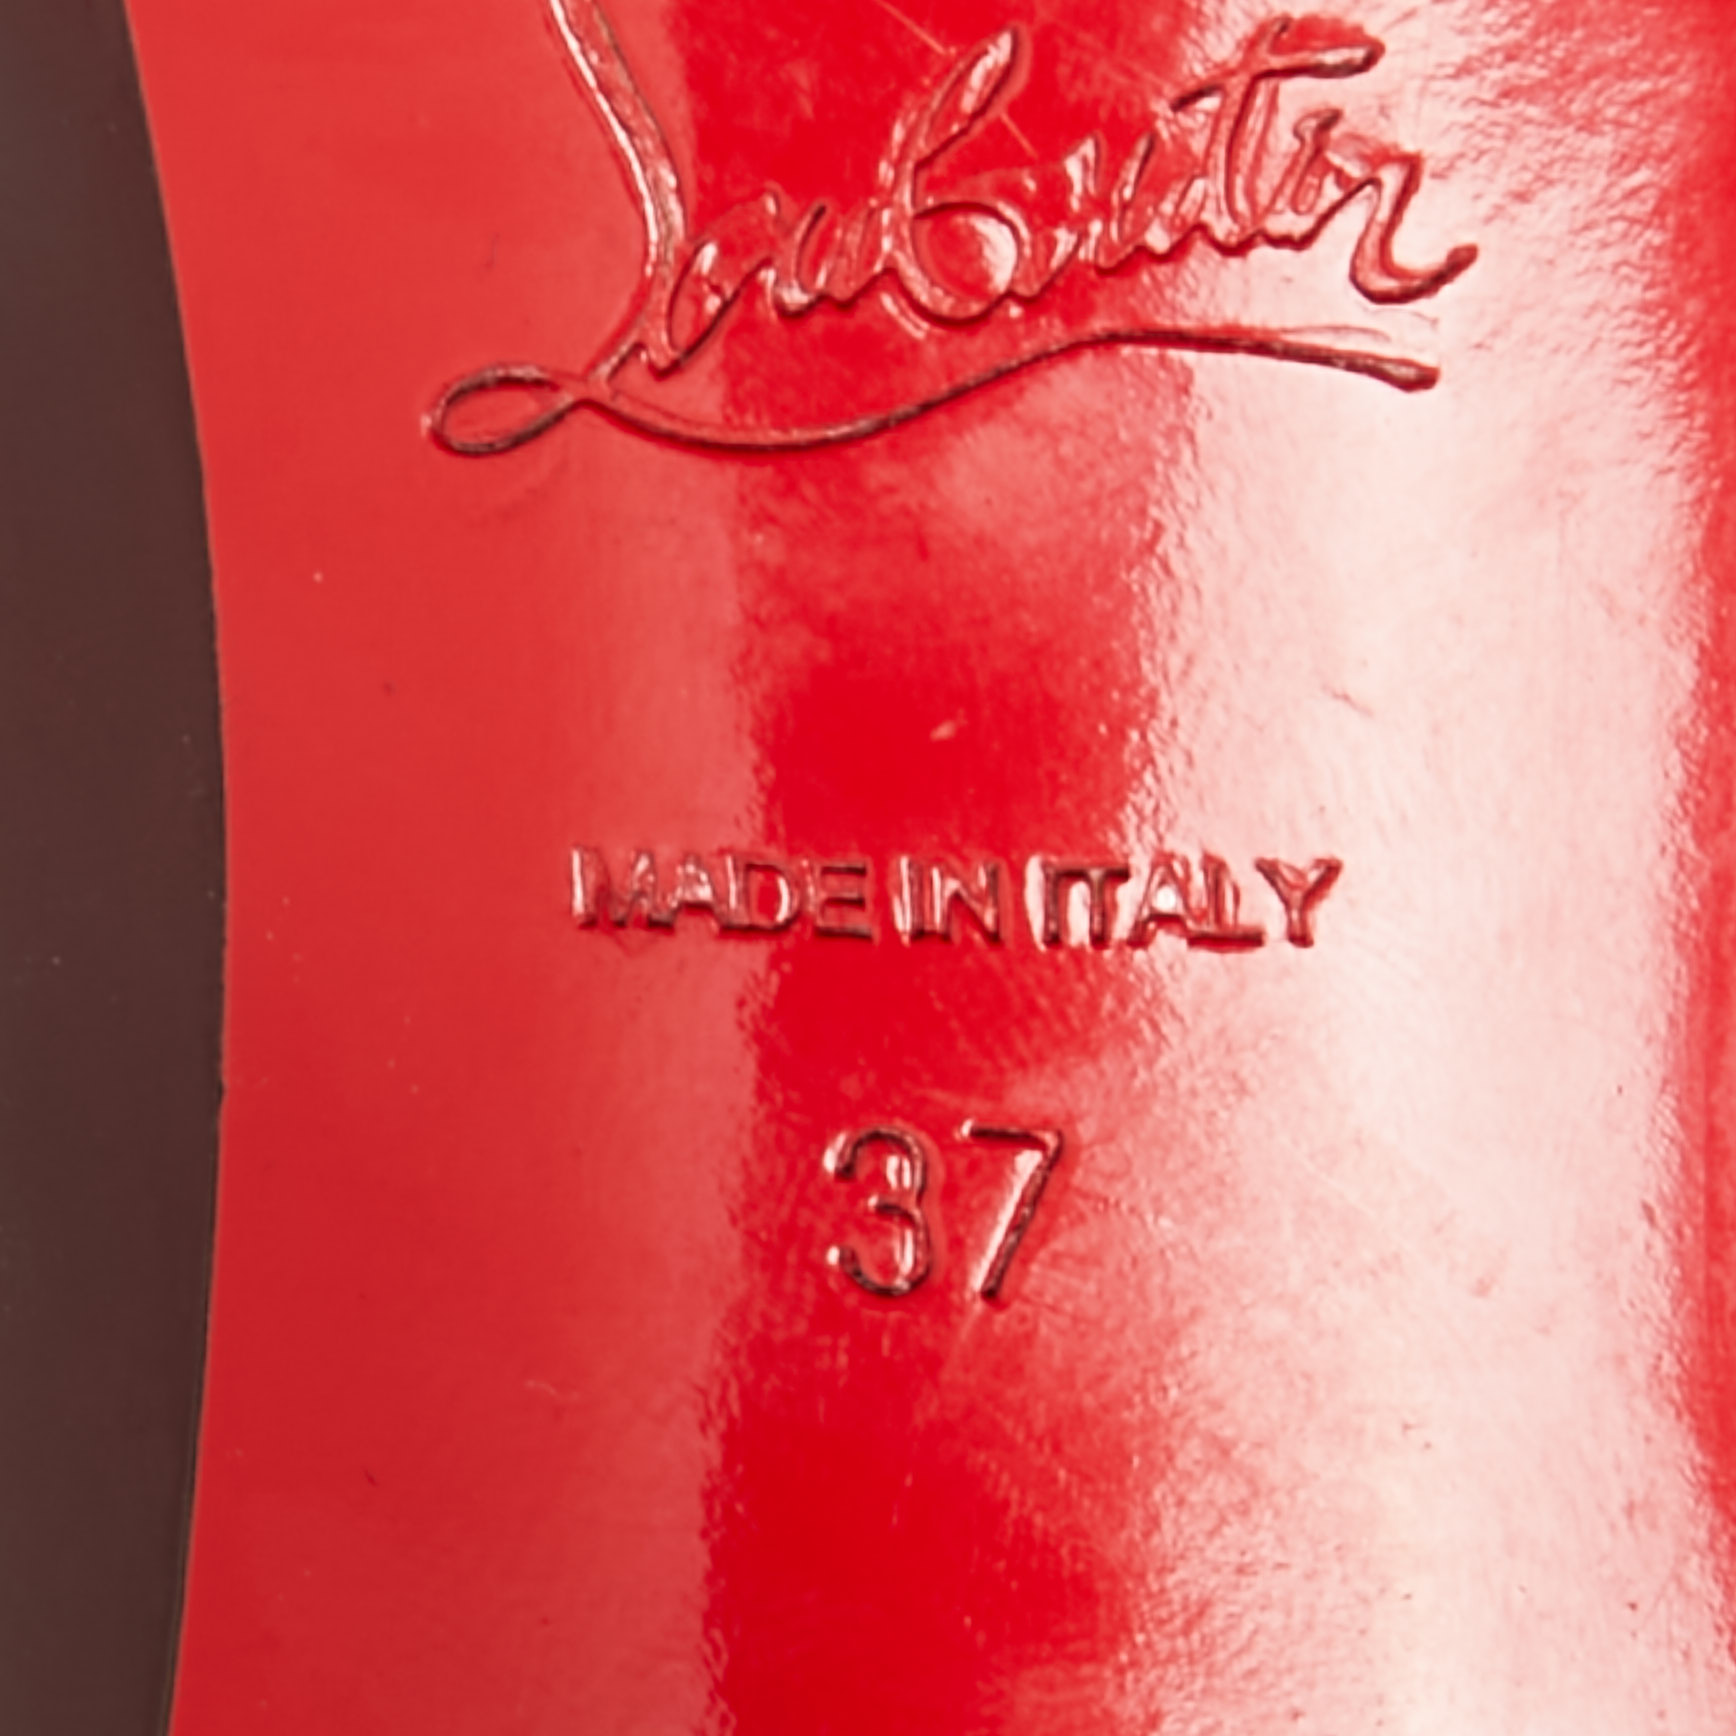 Christian Louboutin Burgundy Patent Leather Matar Claude Peep-Toe Pumps Size 37